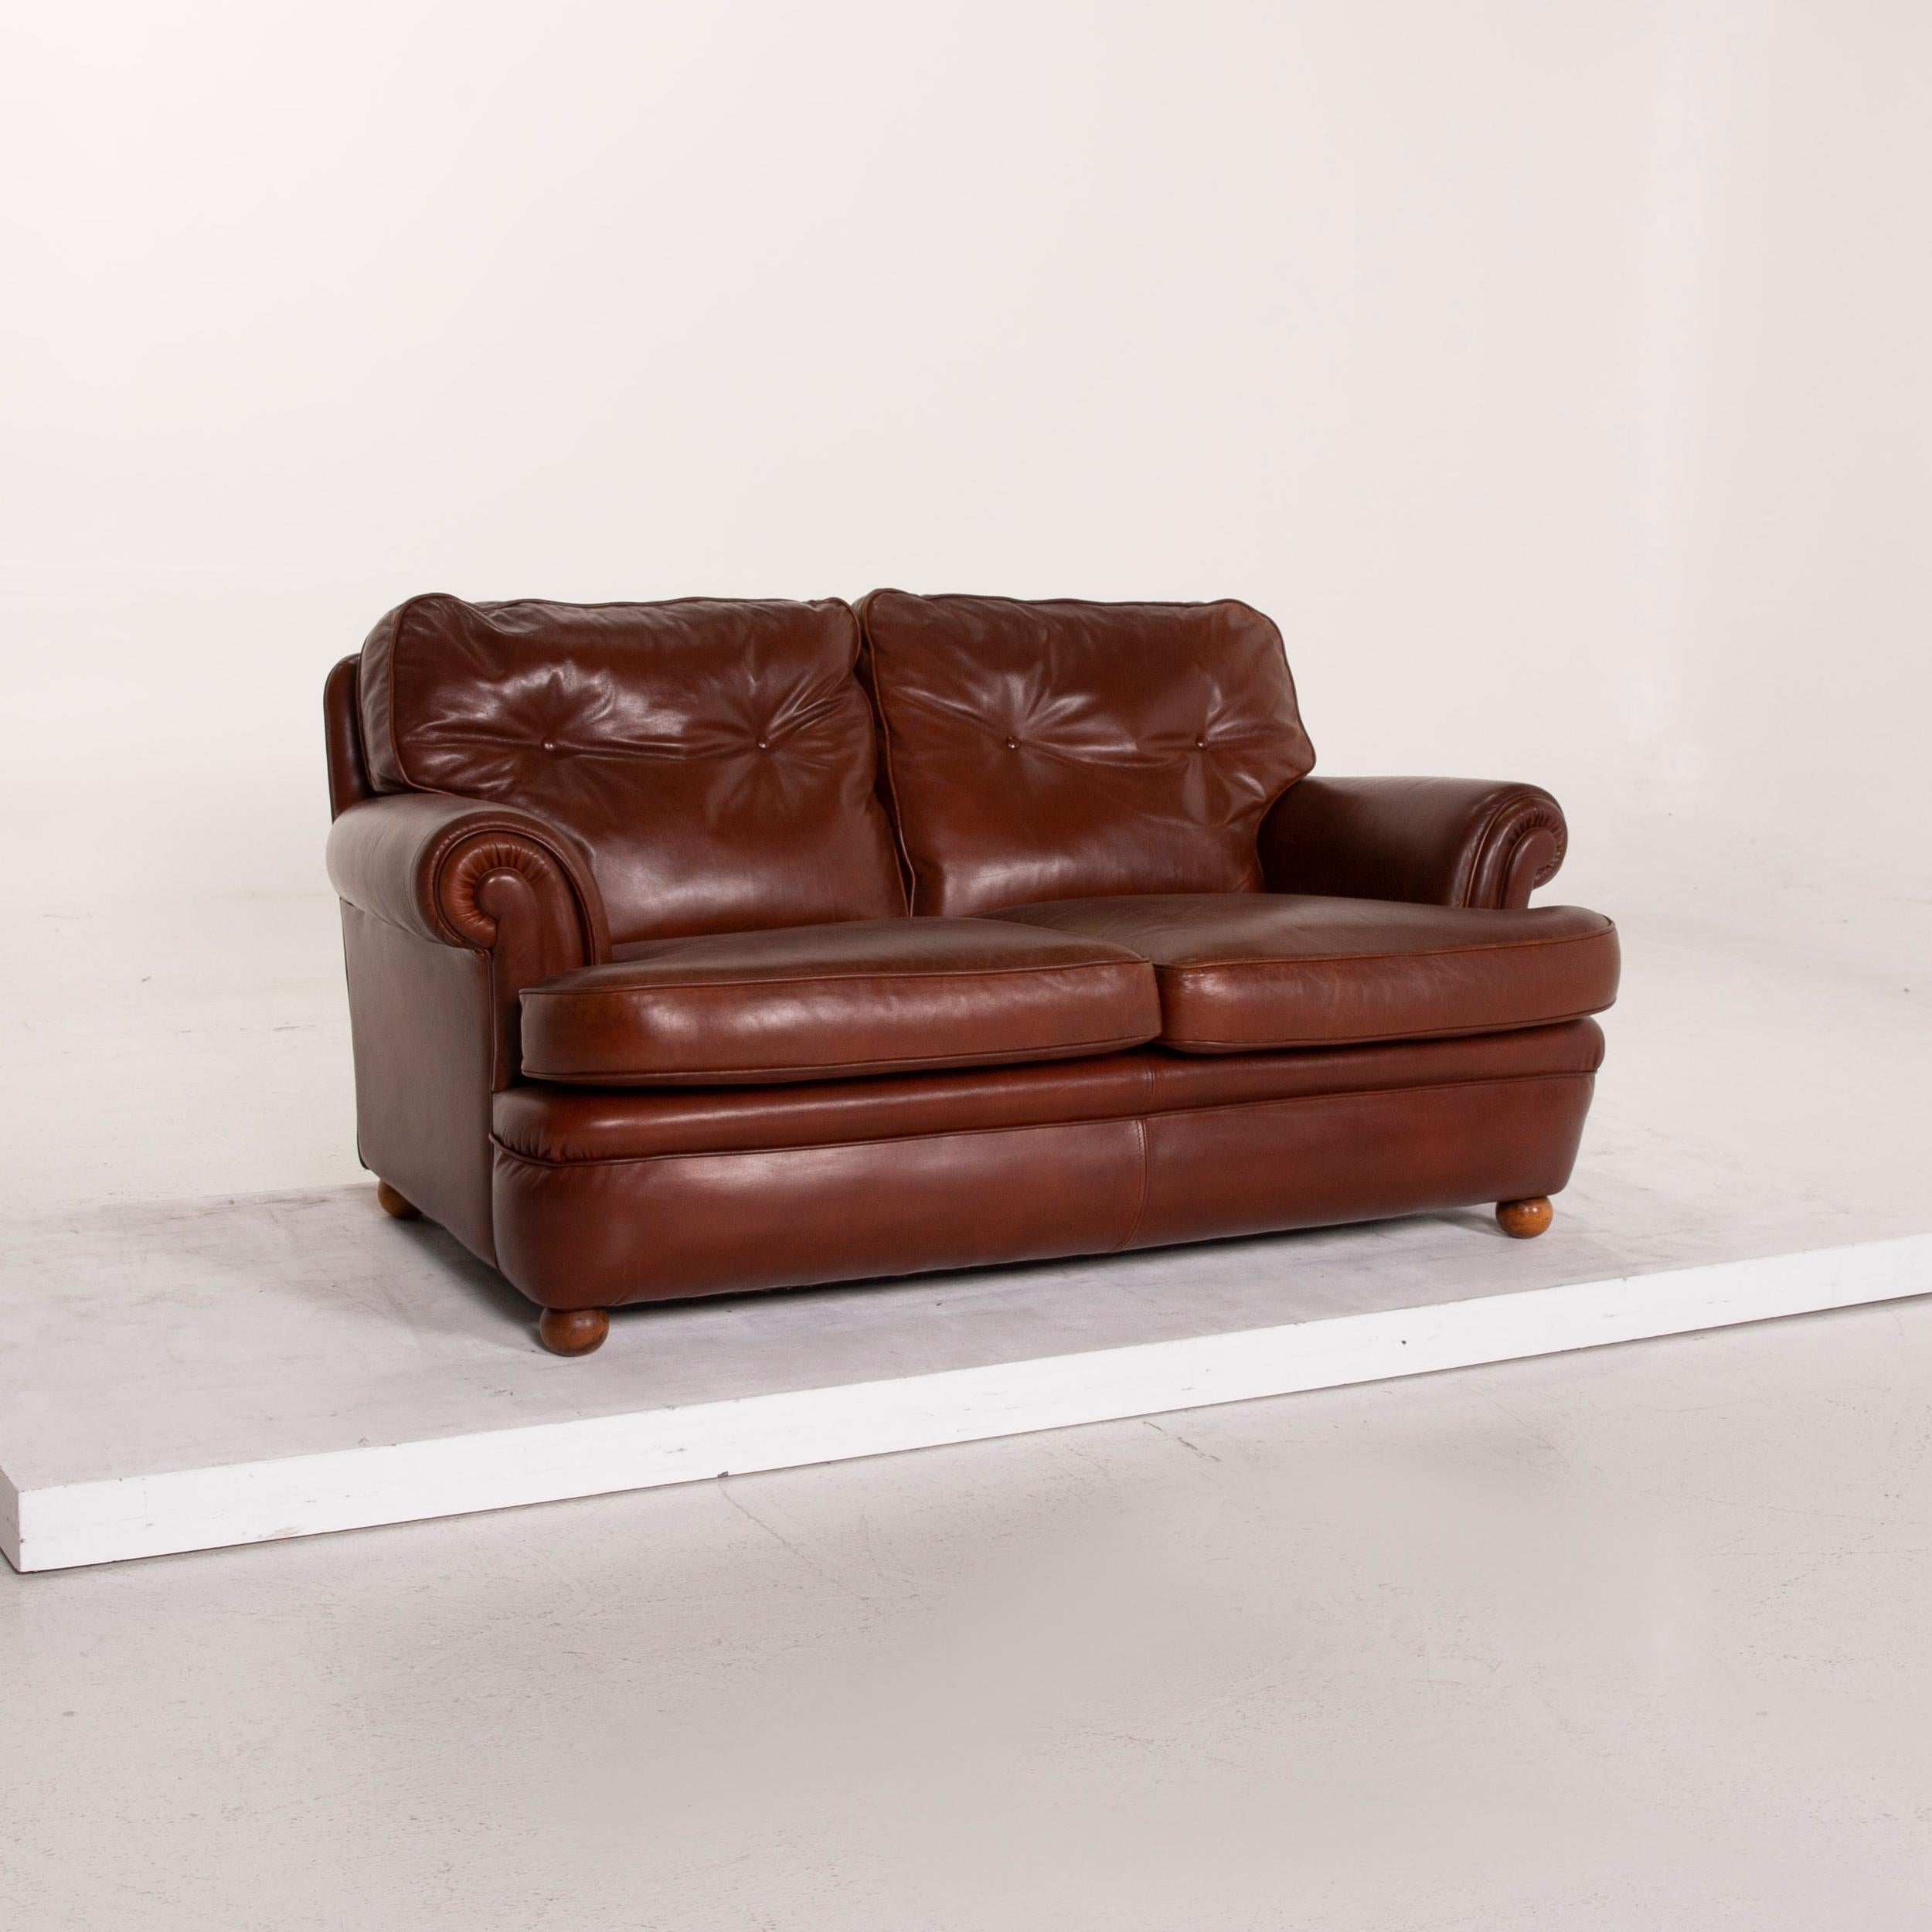 Poltrona Frau Leather Sofa Set Cognac Two-Seat Stool For Sale 1